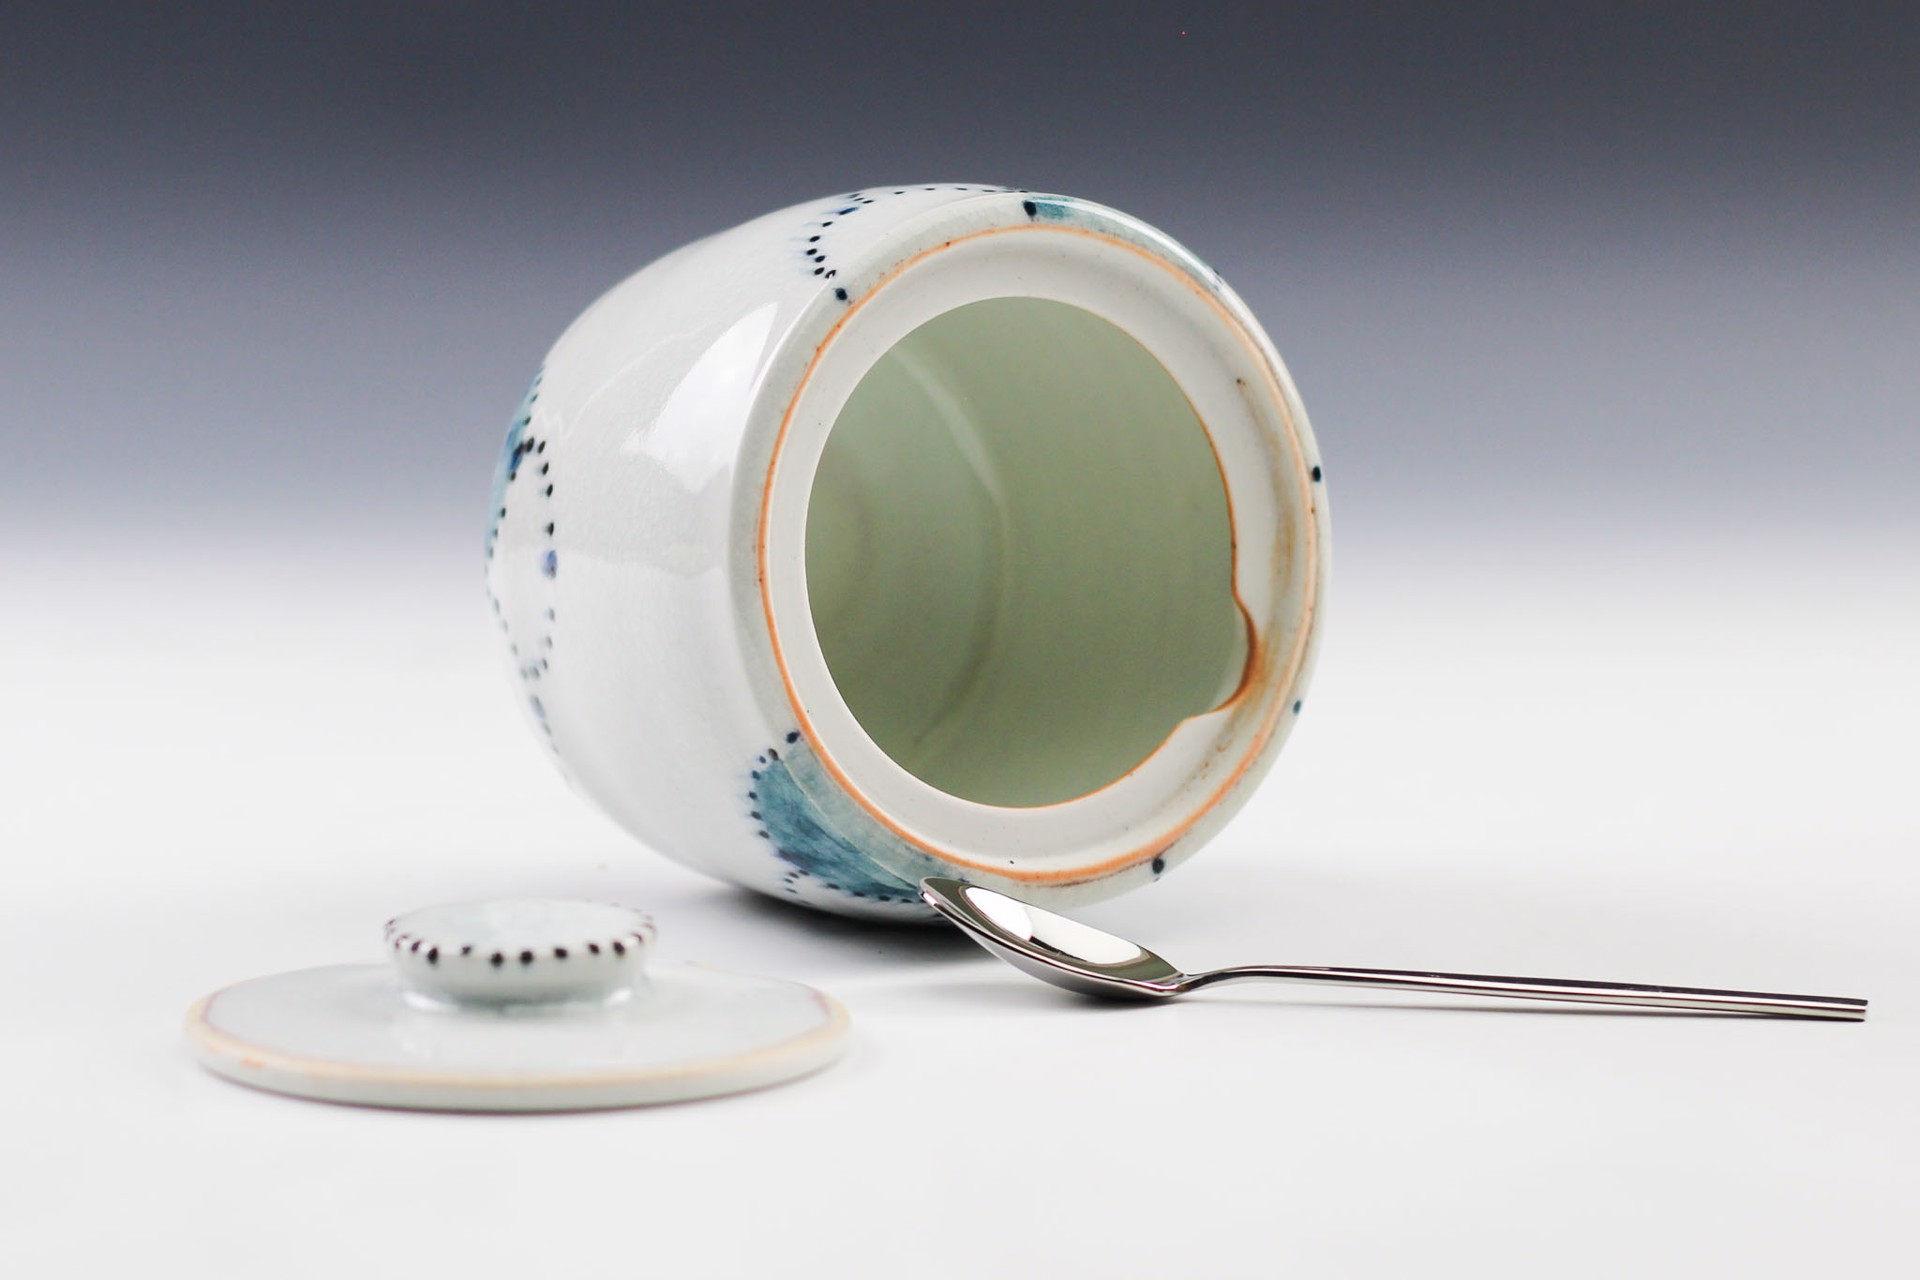 Sugar Jar with Spoon by Juliane Shibata